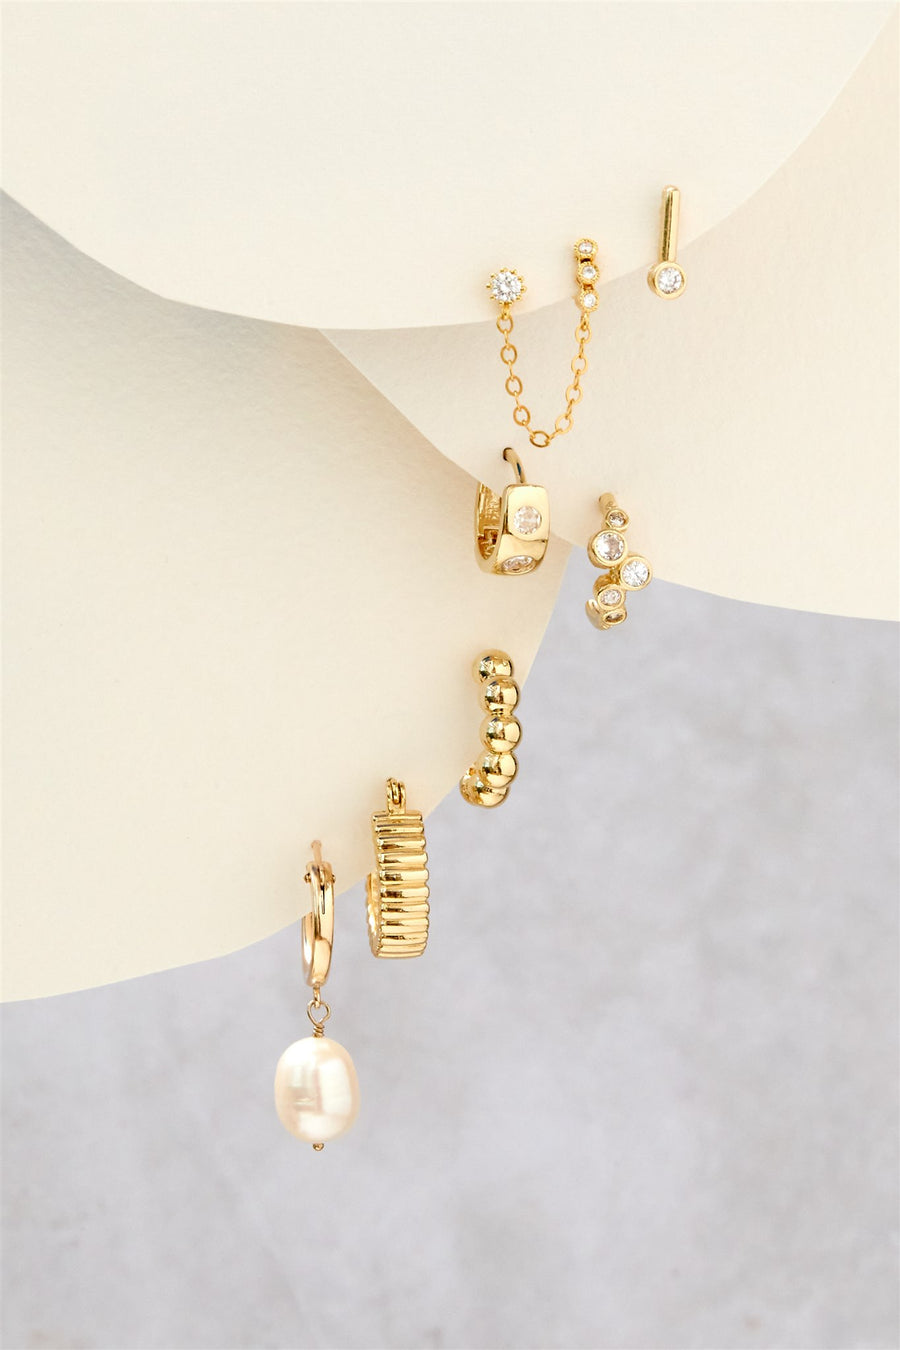 Buy Latest Simple Gold Design 2 Layer Girls Earrings Buy Online Shopping